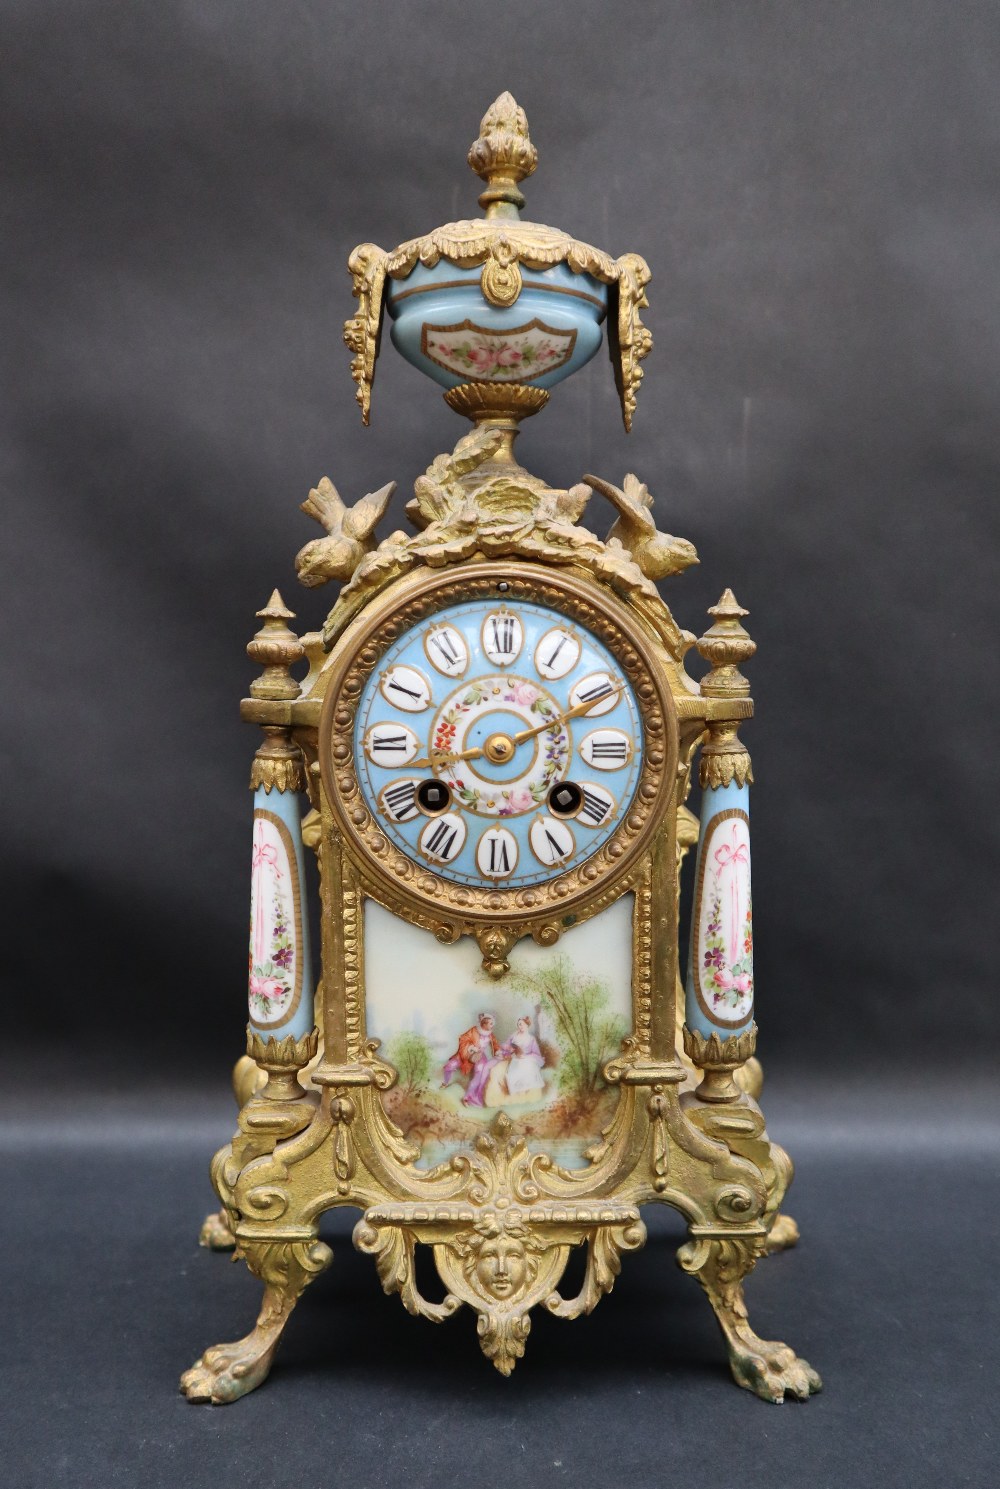 A 19th century French ormolu clock with a porcelain urn surmount,